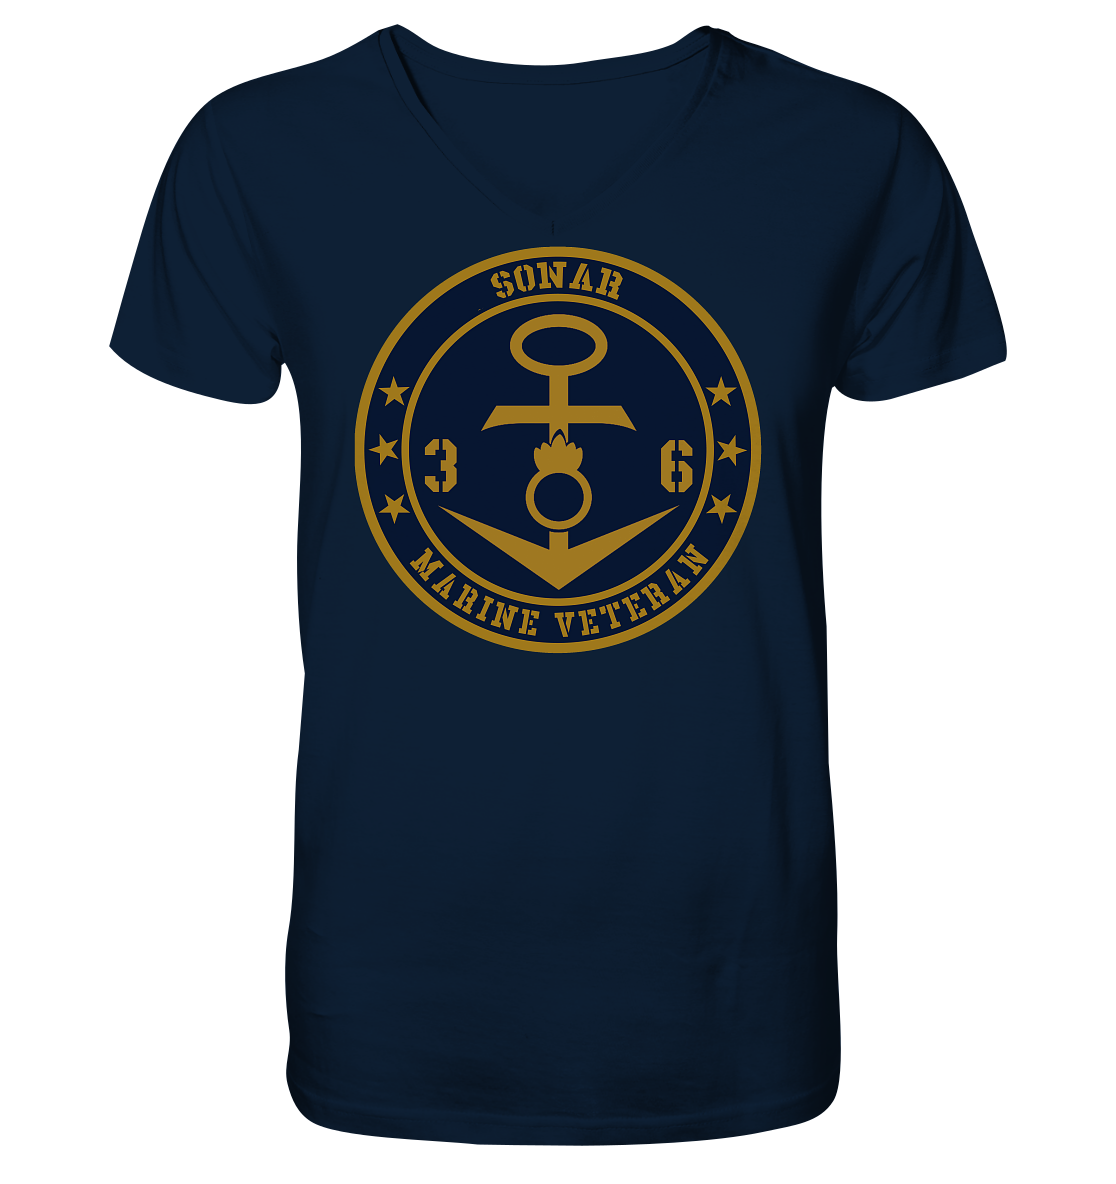 Marine Veteran 36er SONAR - Mens Organic V-Neck Shirt